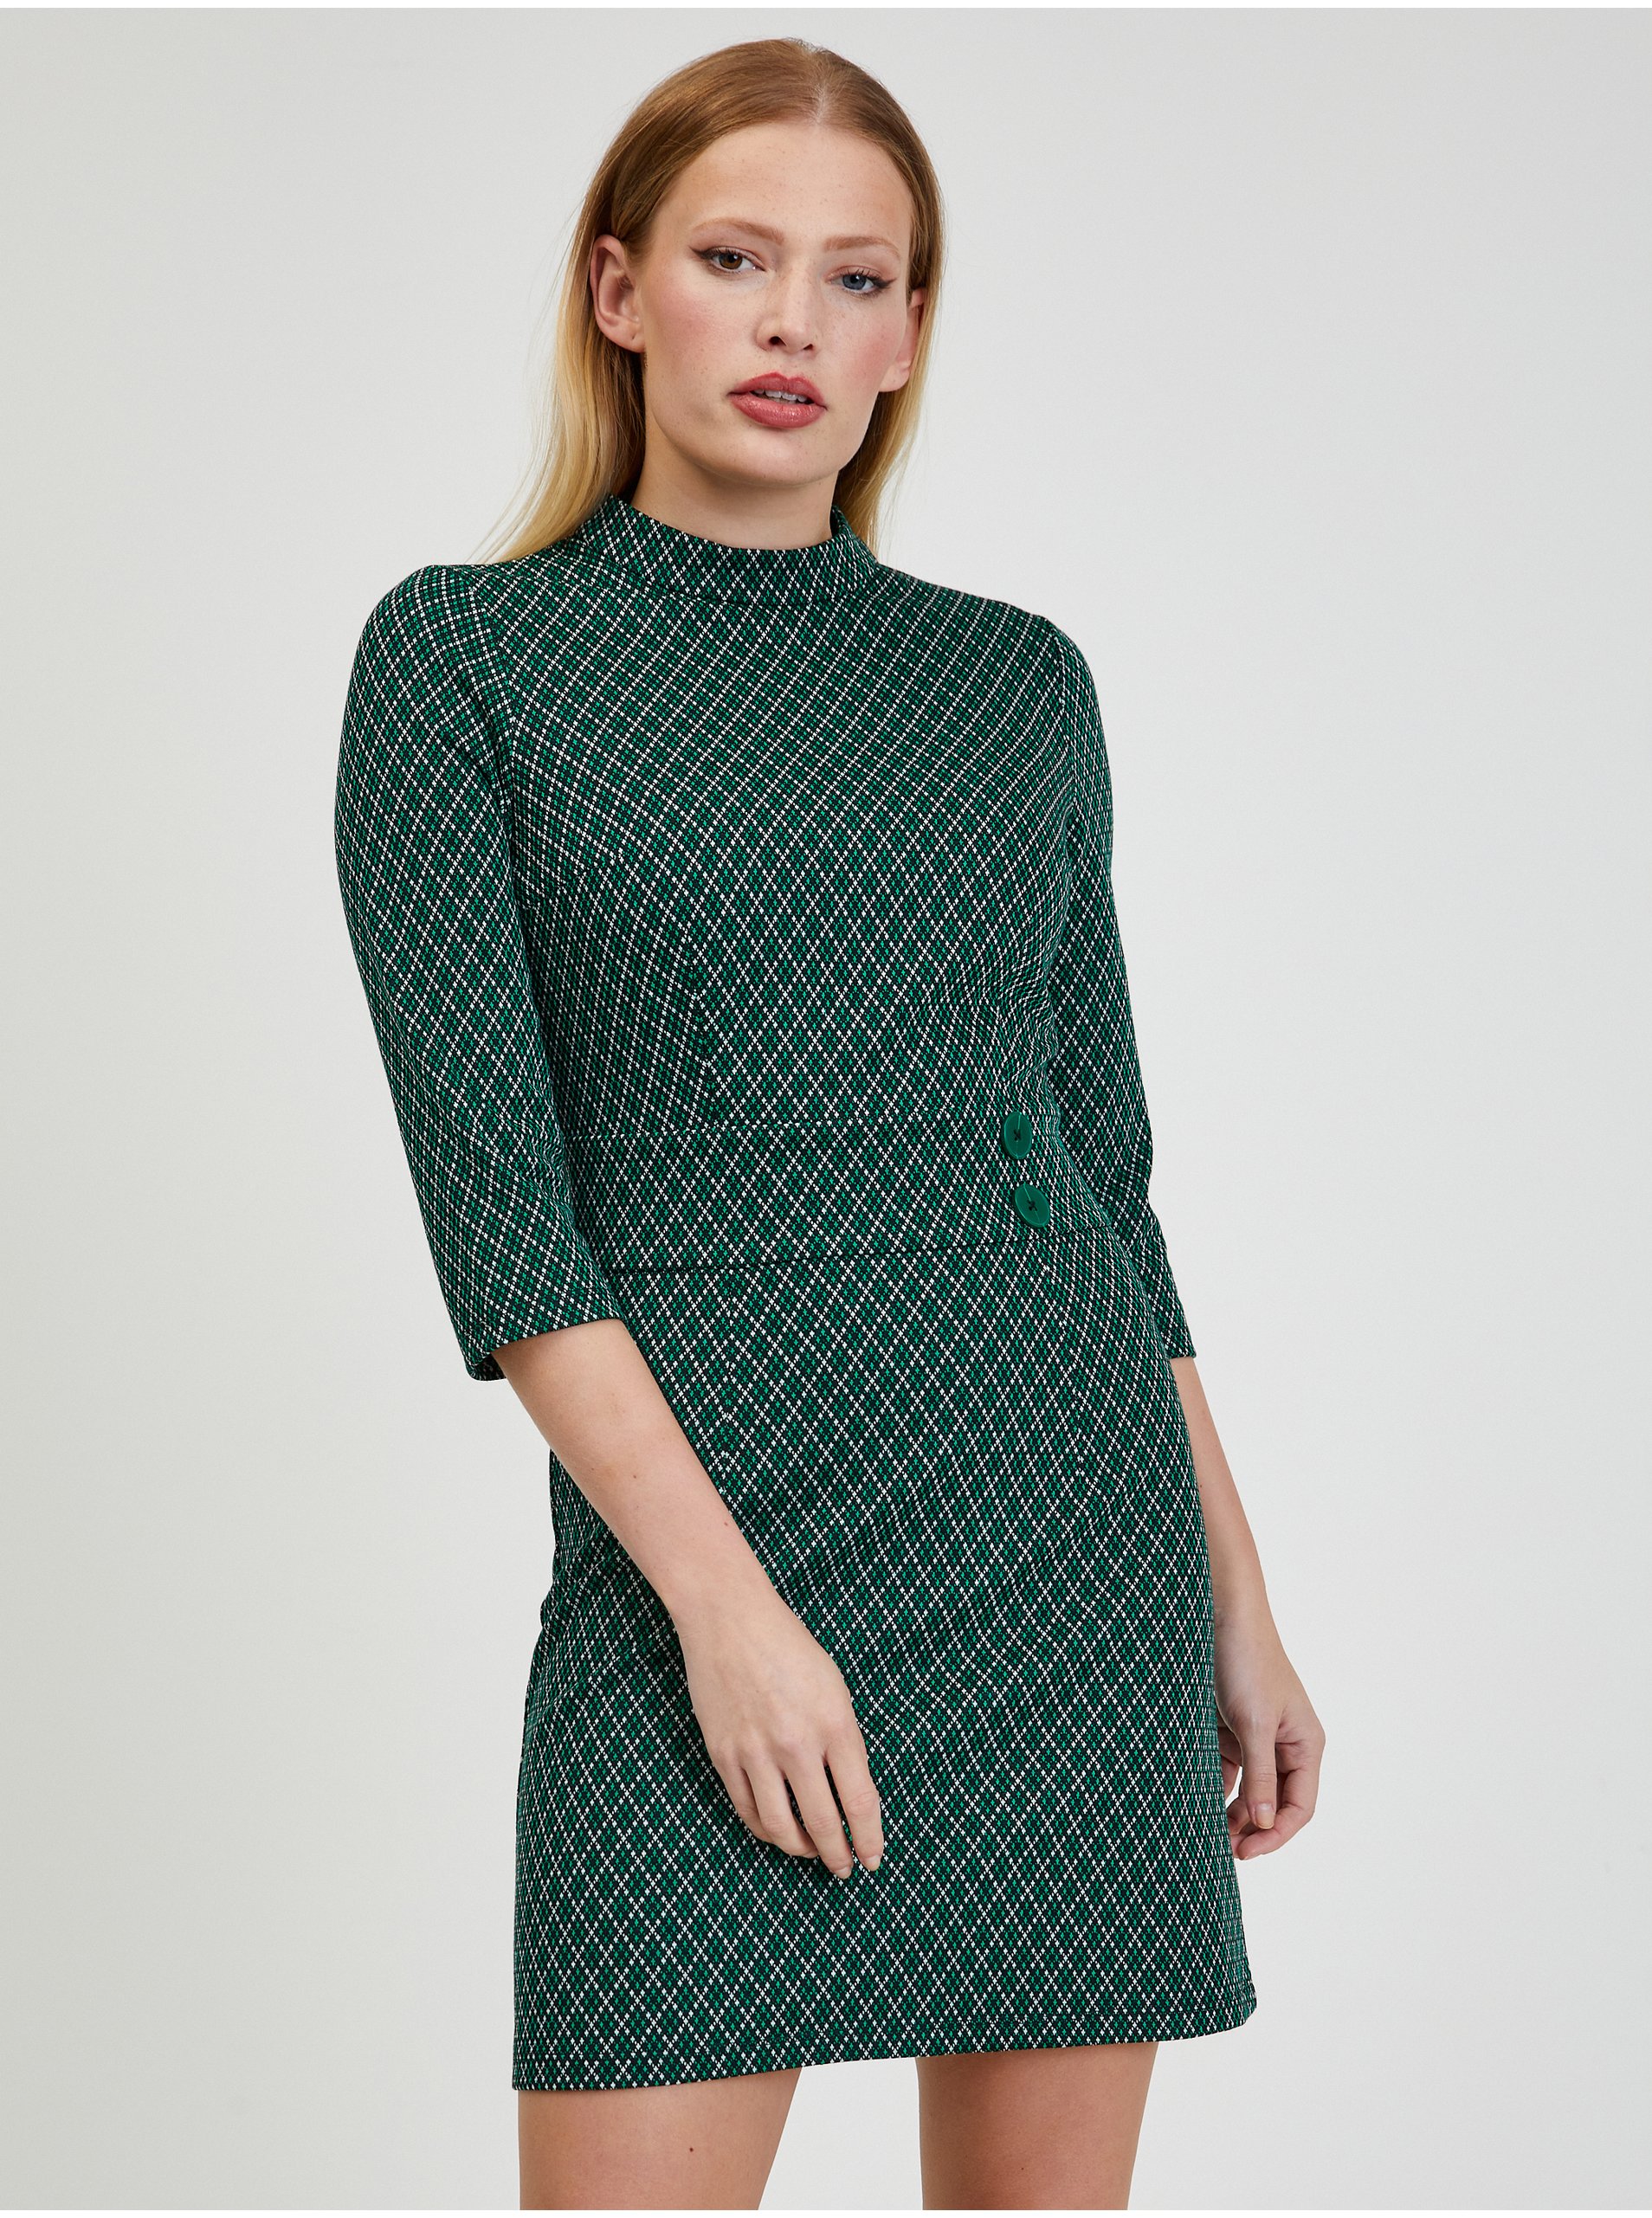 Orsay Green Ladies Patterned Dress - Women